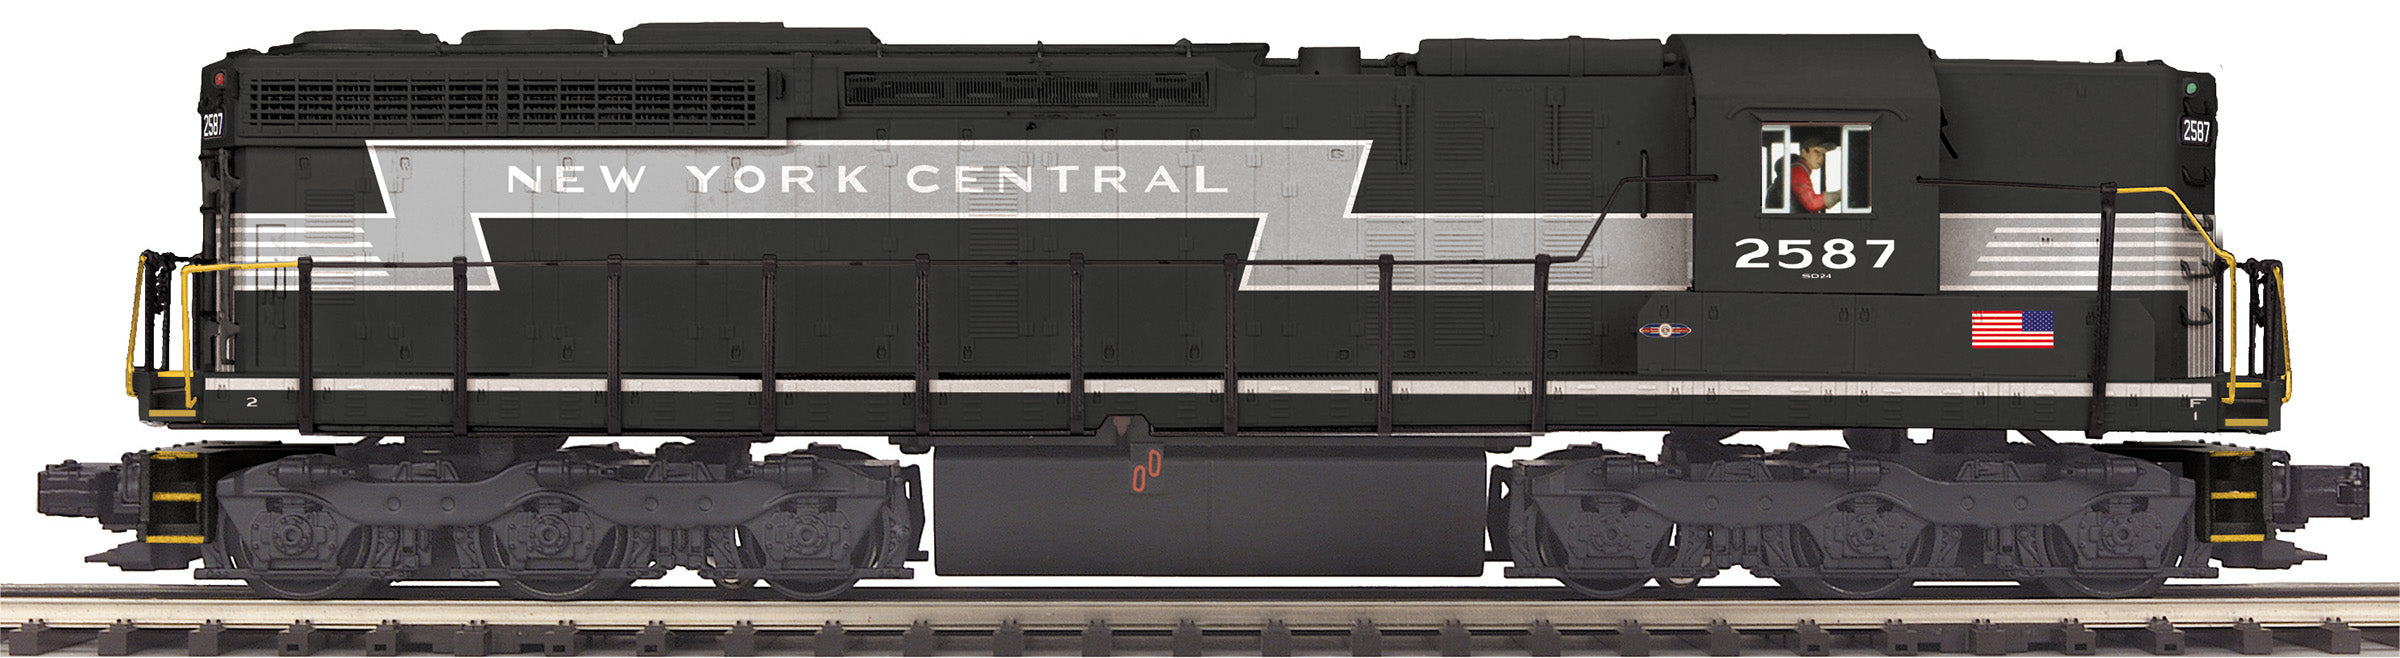 MTH 20-21728-1 - SD24 Diesel Engine "New York Central" #2587 w/ PS3 (Lightening Stripe) - Custom Run for METCA